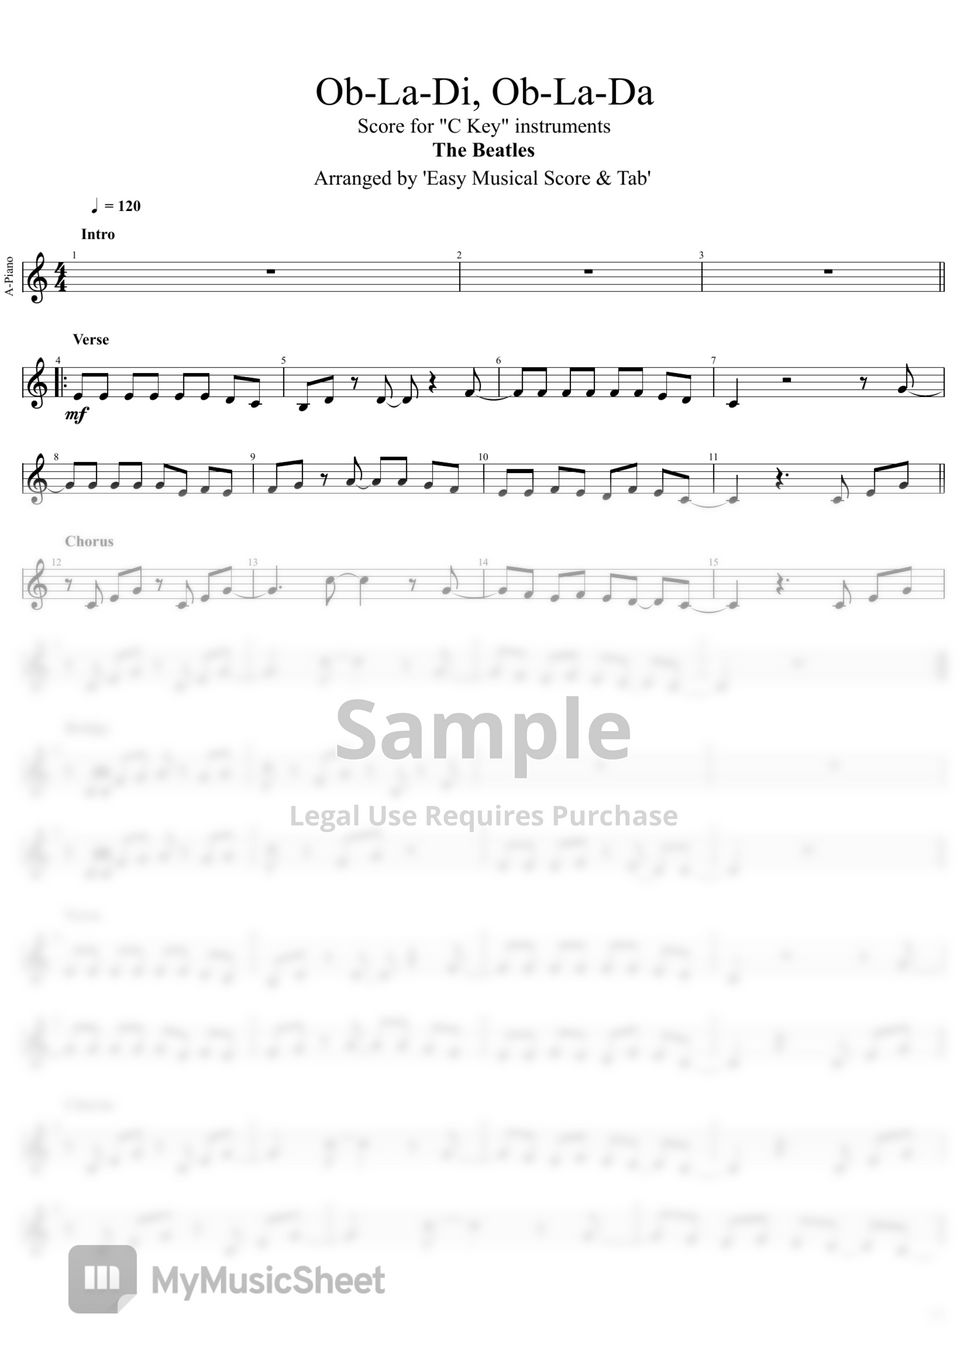 The Beatles - Ob-La-Di, Ob-La-Da (Score for "C Key" instruments) by EMST